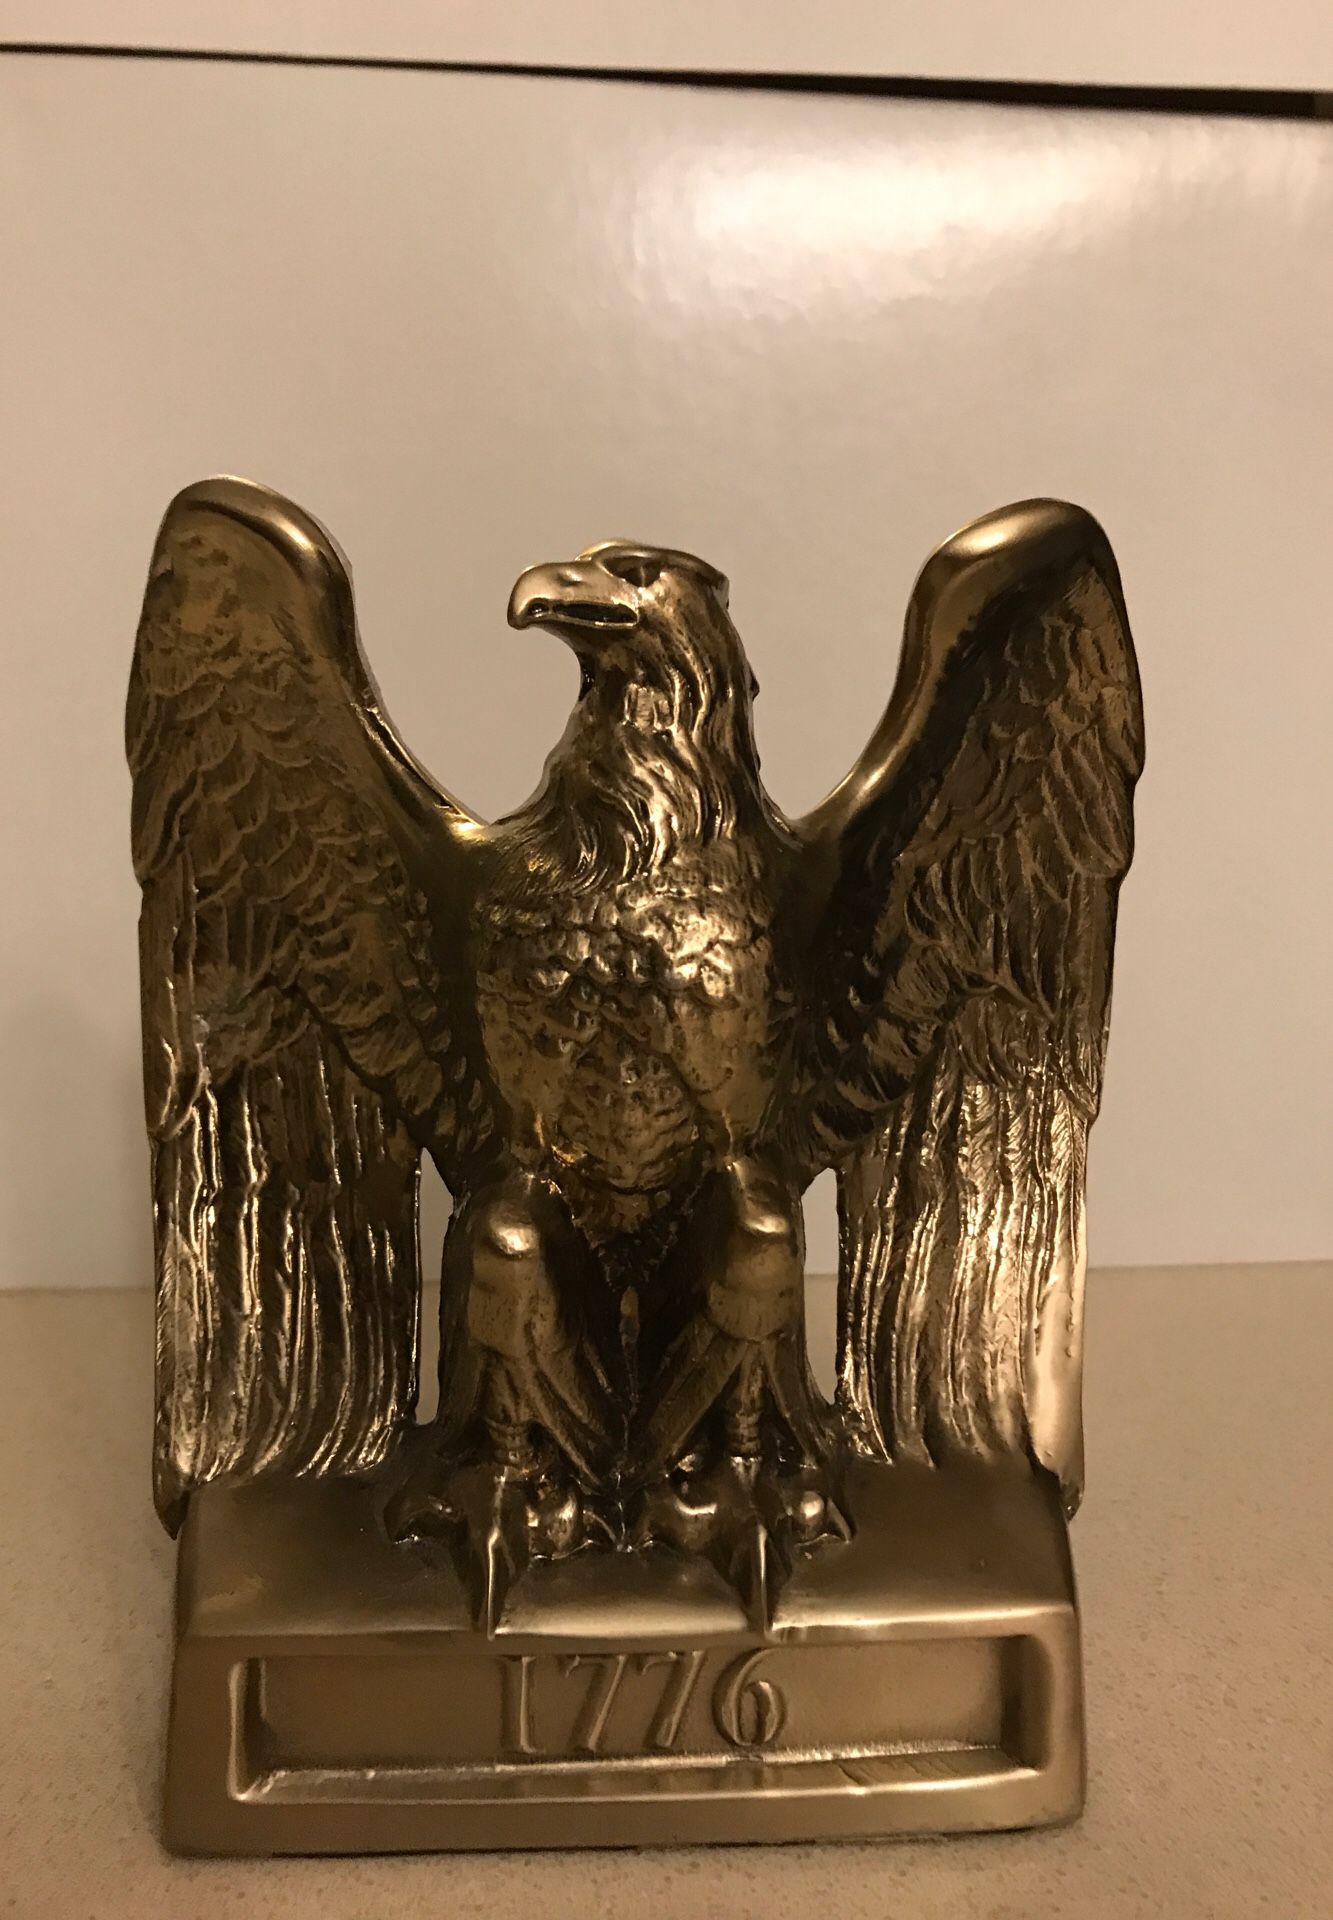 Vintage brass American eagle 1776 sculpture